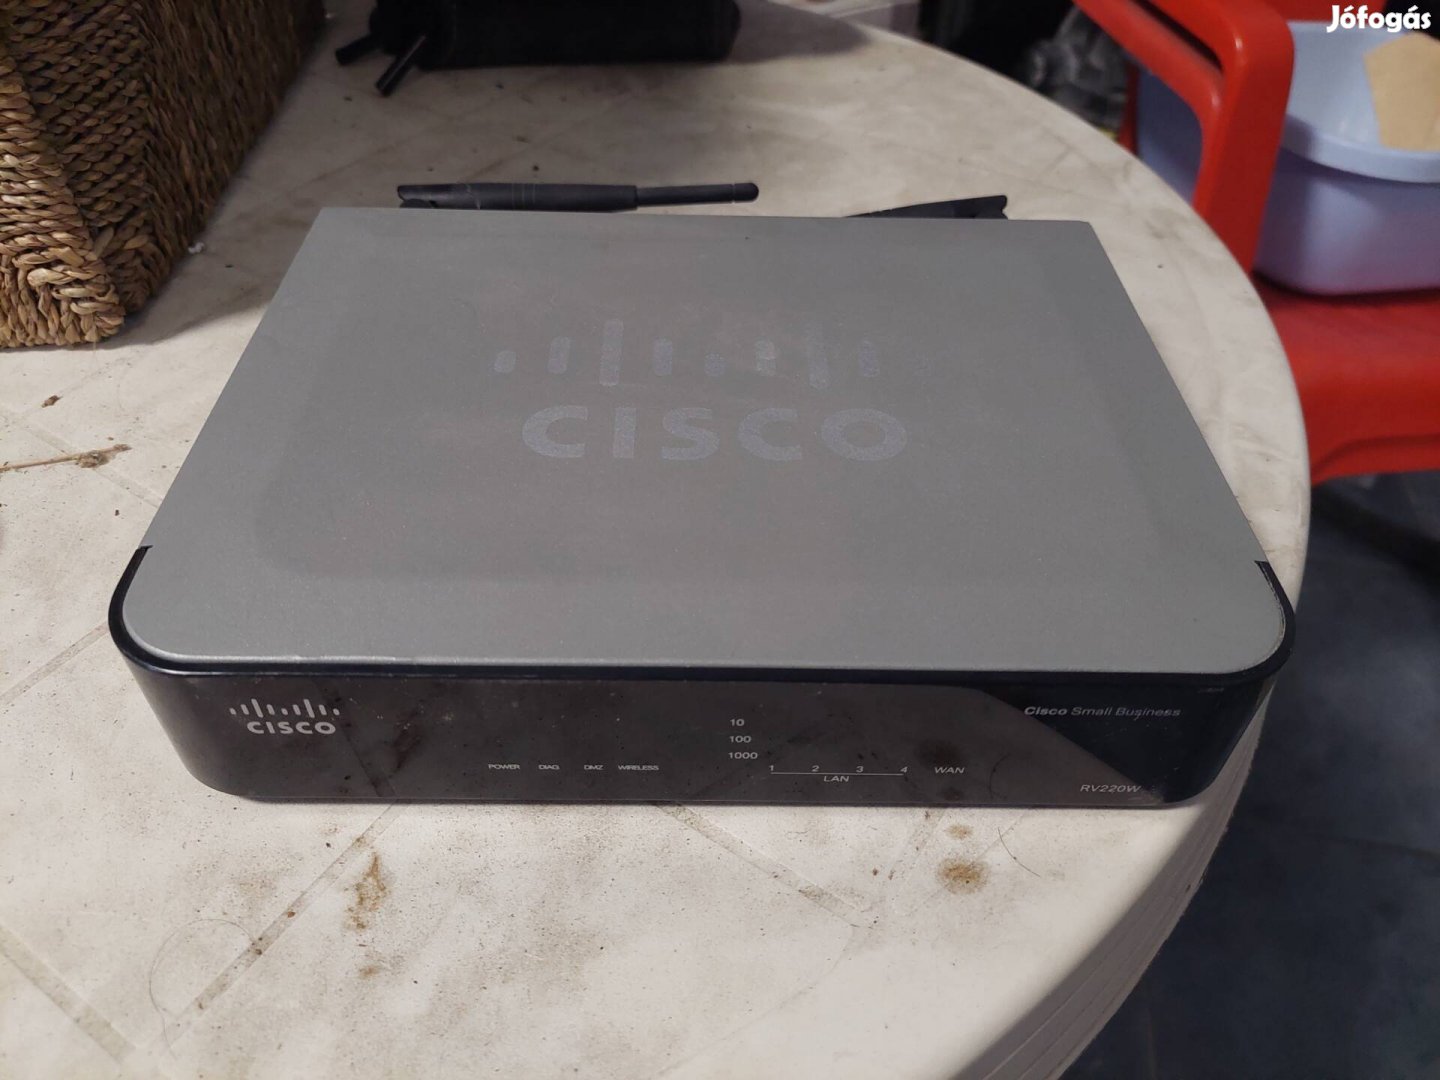 Cisco RV220W soho router